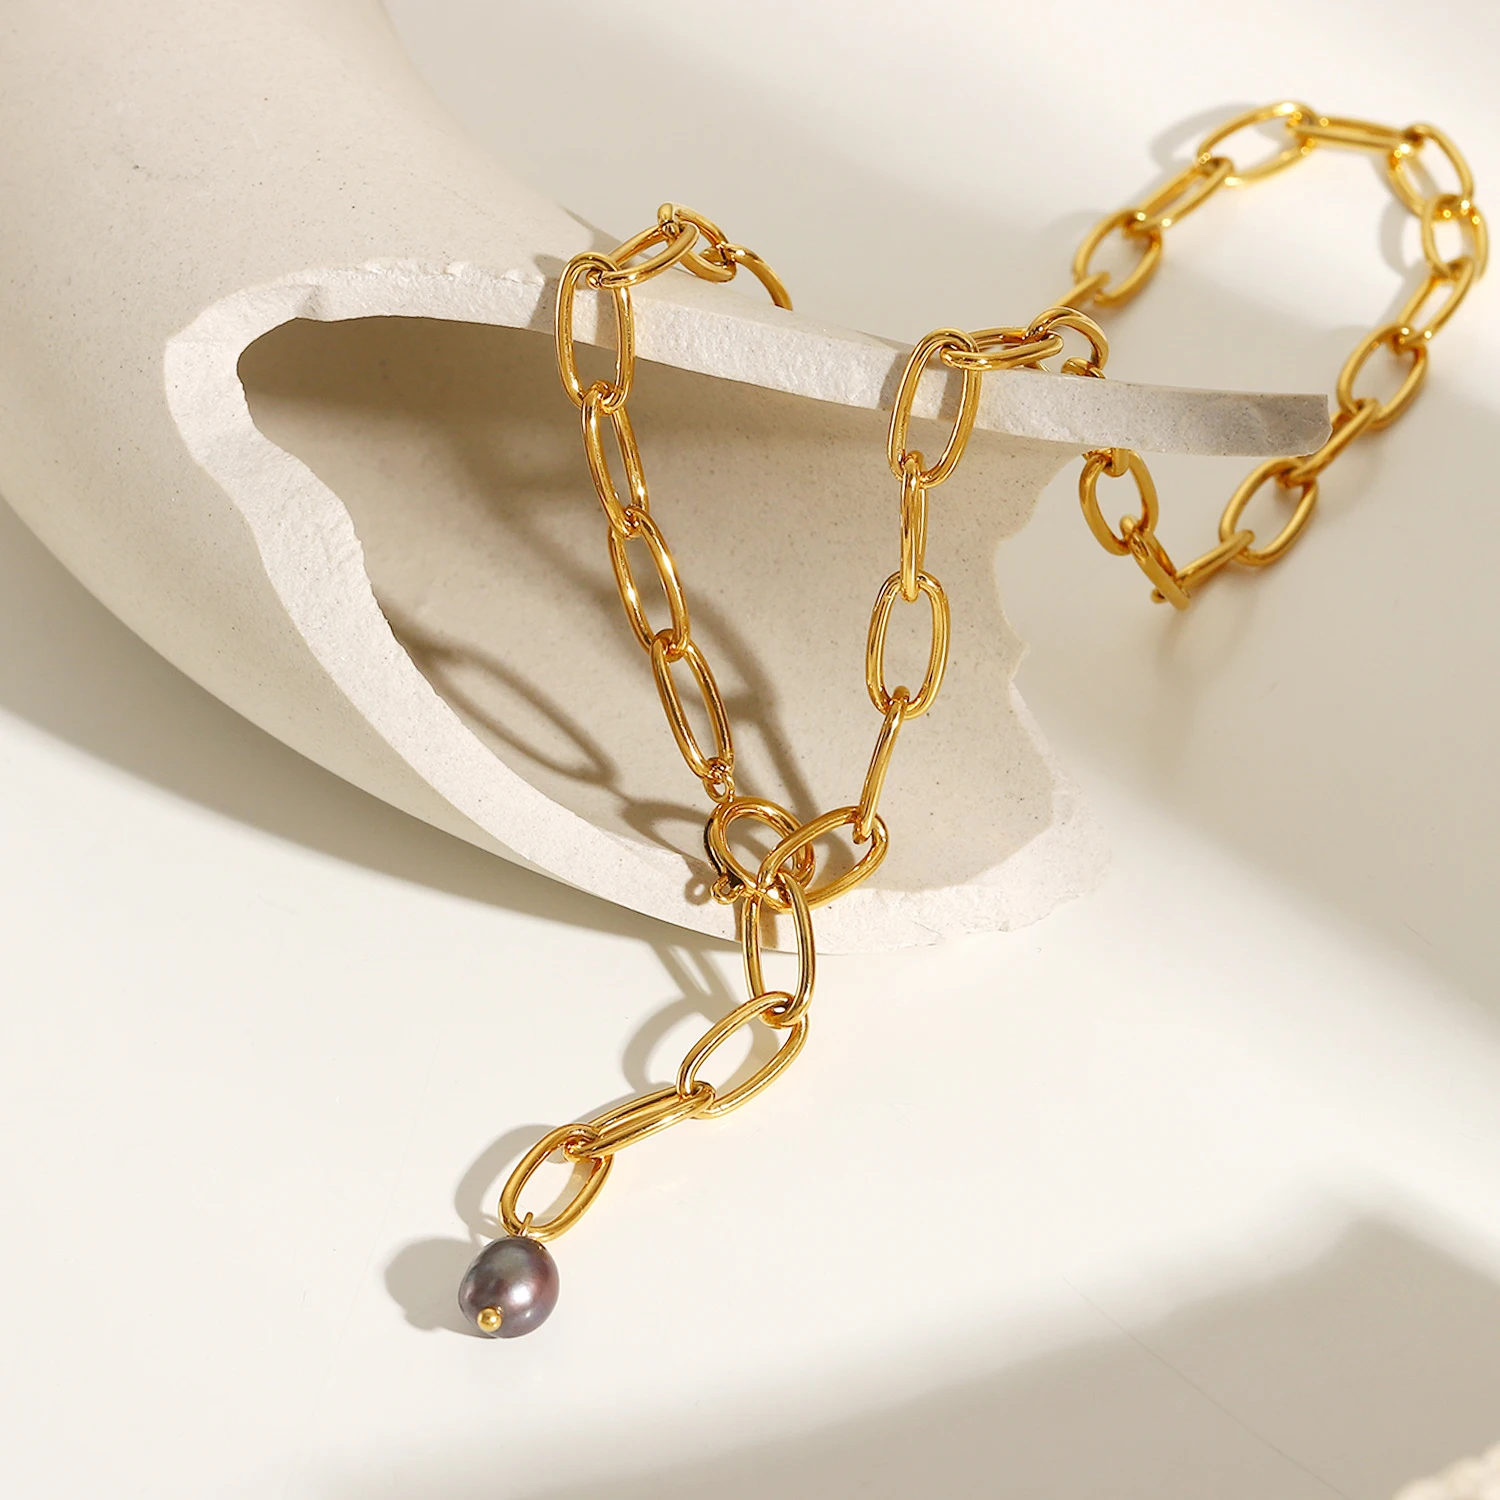 Купи Amaiyllis 18K Gold Vintage Black Pearl Long Pendant Necklace Fashion Cross Chain Ladies Bracelet Necklace Jewelry за 213 рублей в магазине AliExpress